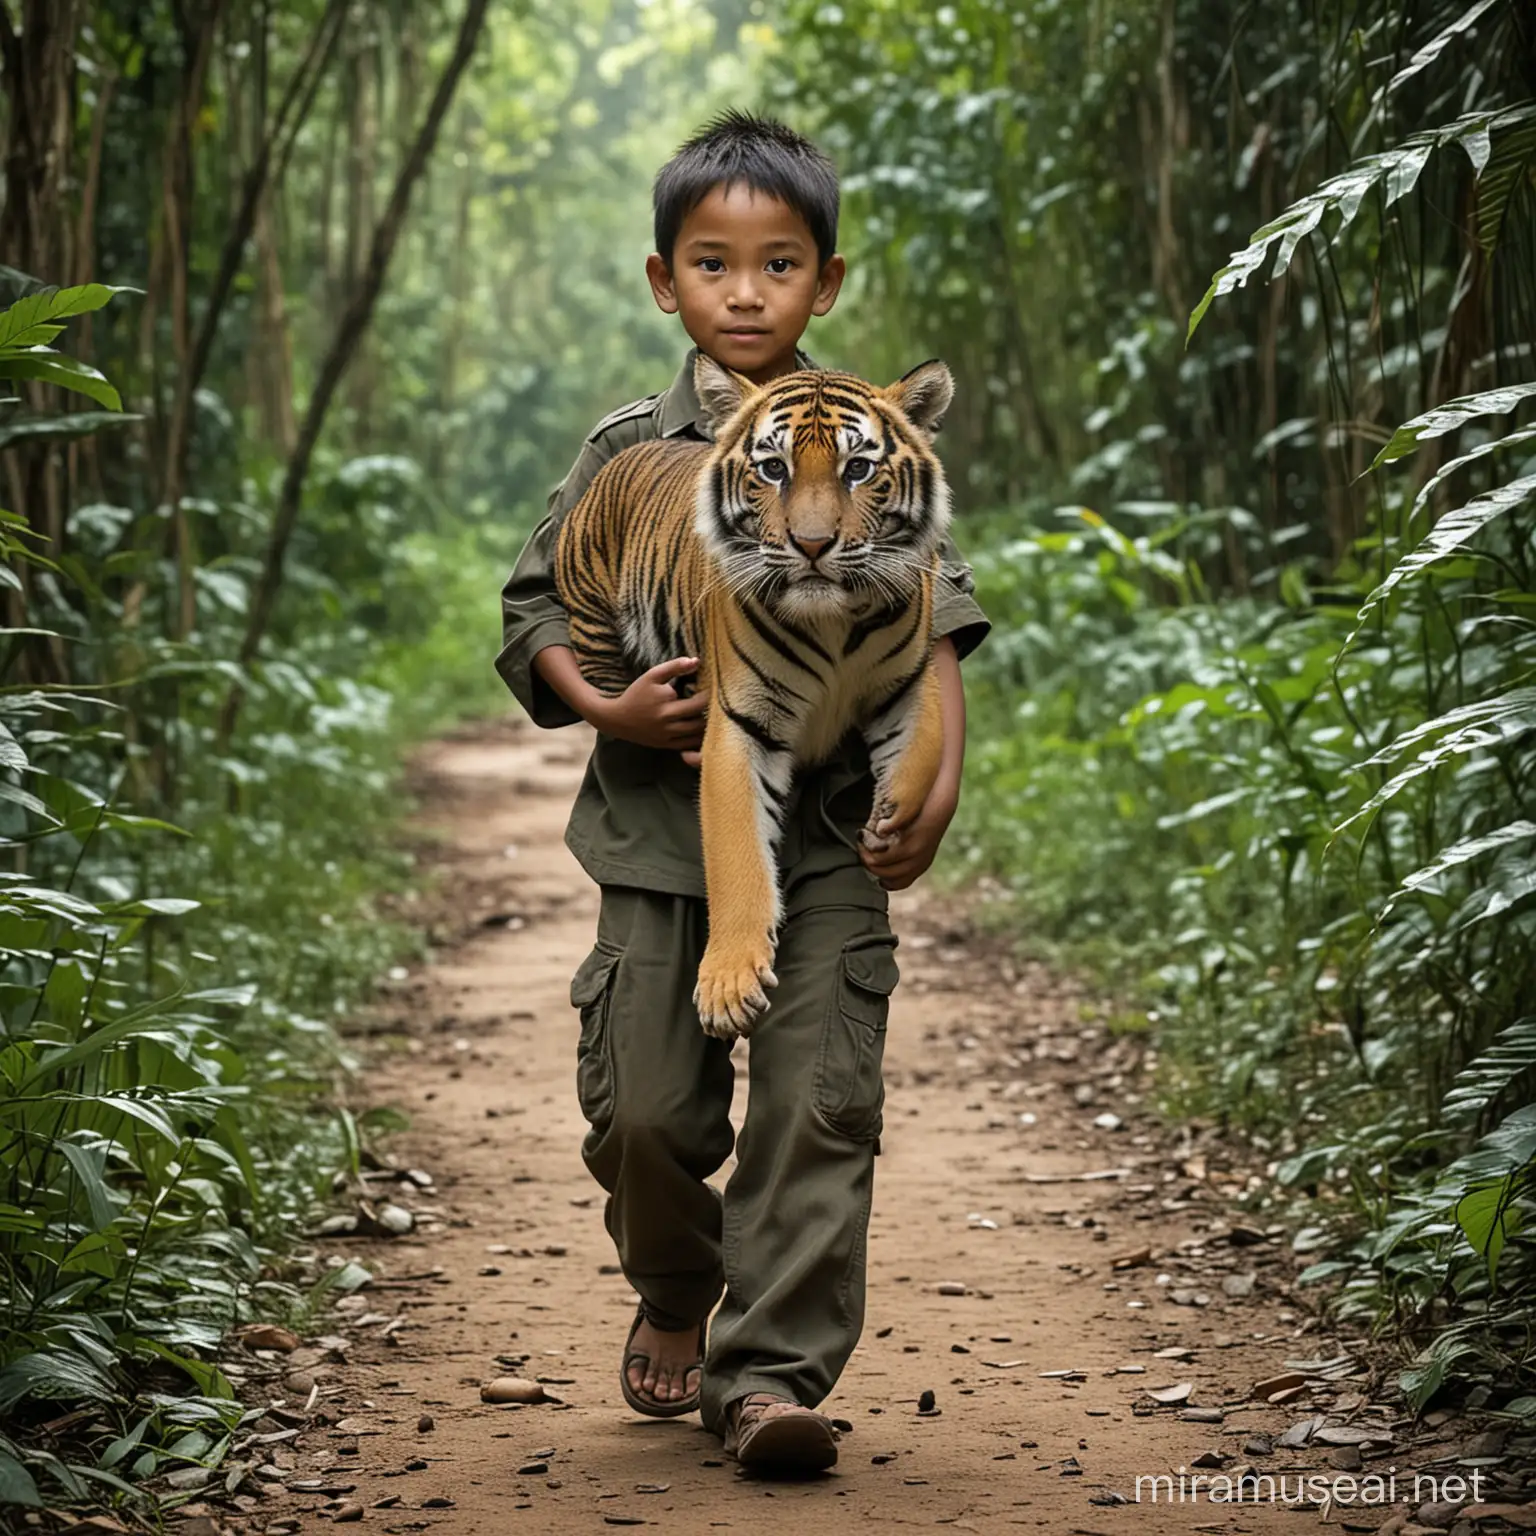 seorang anak lelaki berusia 5 tahun asal indonesia sesdang menggendong seekor anak harimau. latarbelakang sebuah pedalaman hutan